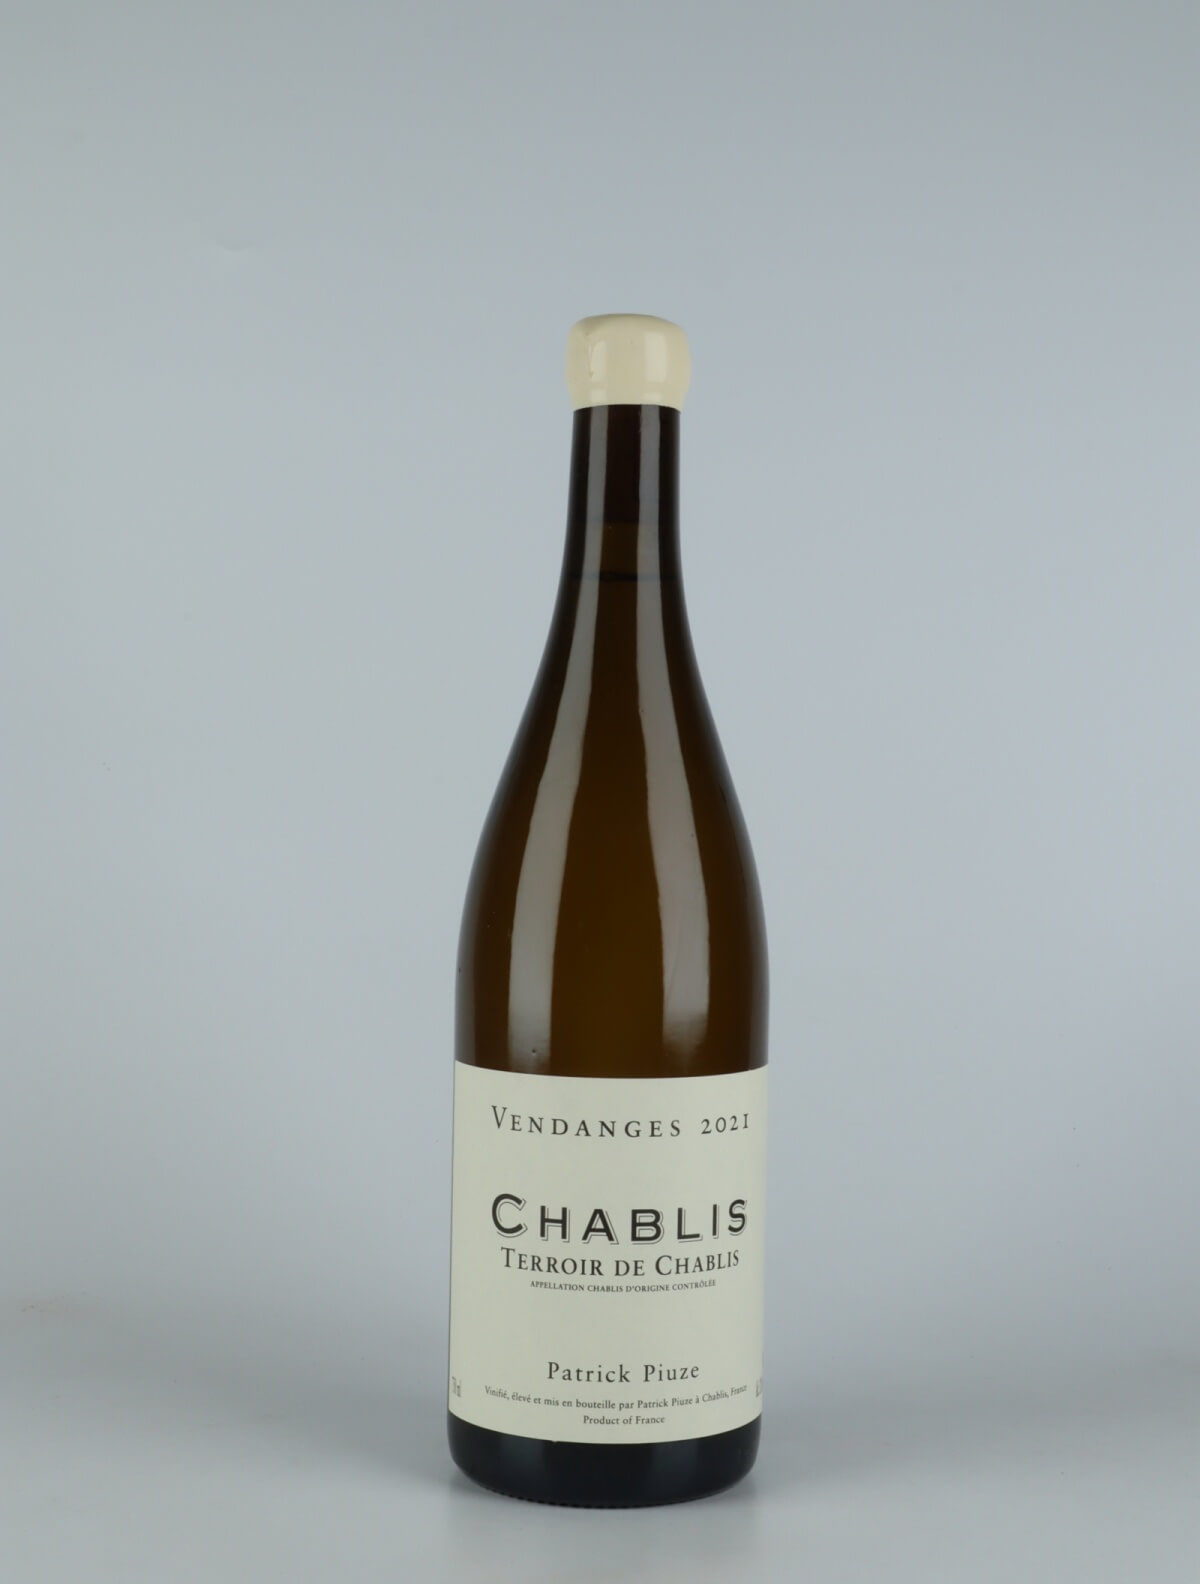 A bottle 2021 Chablis - Terroir de Chablis White wine from Patrick Piuze, Burgundy in France